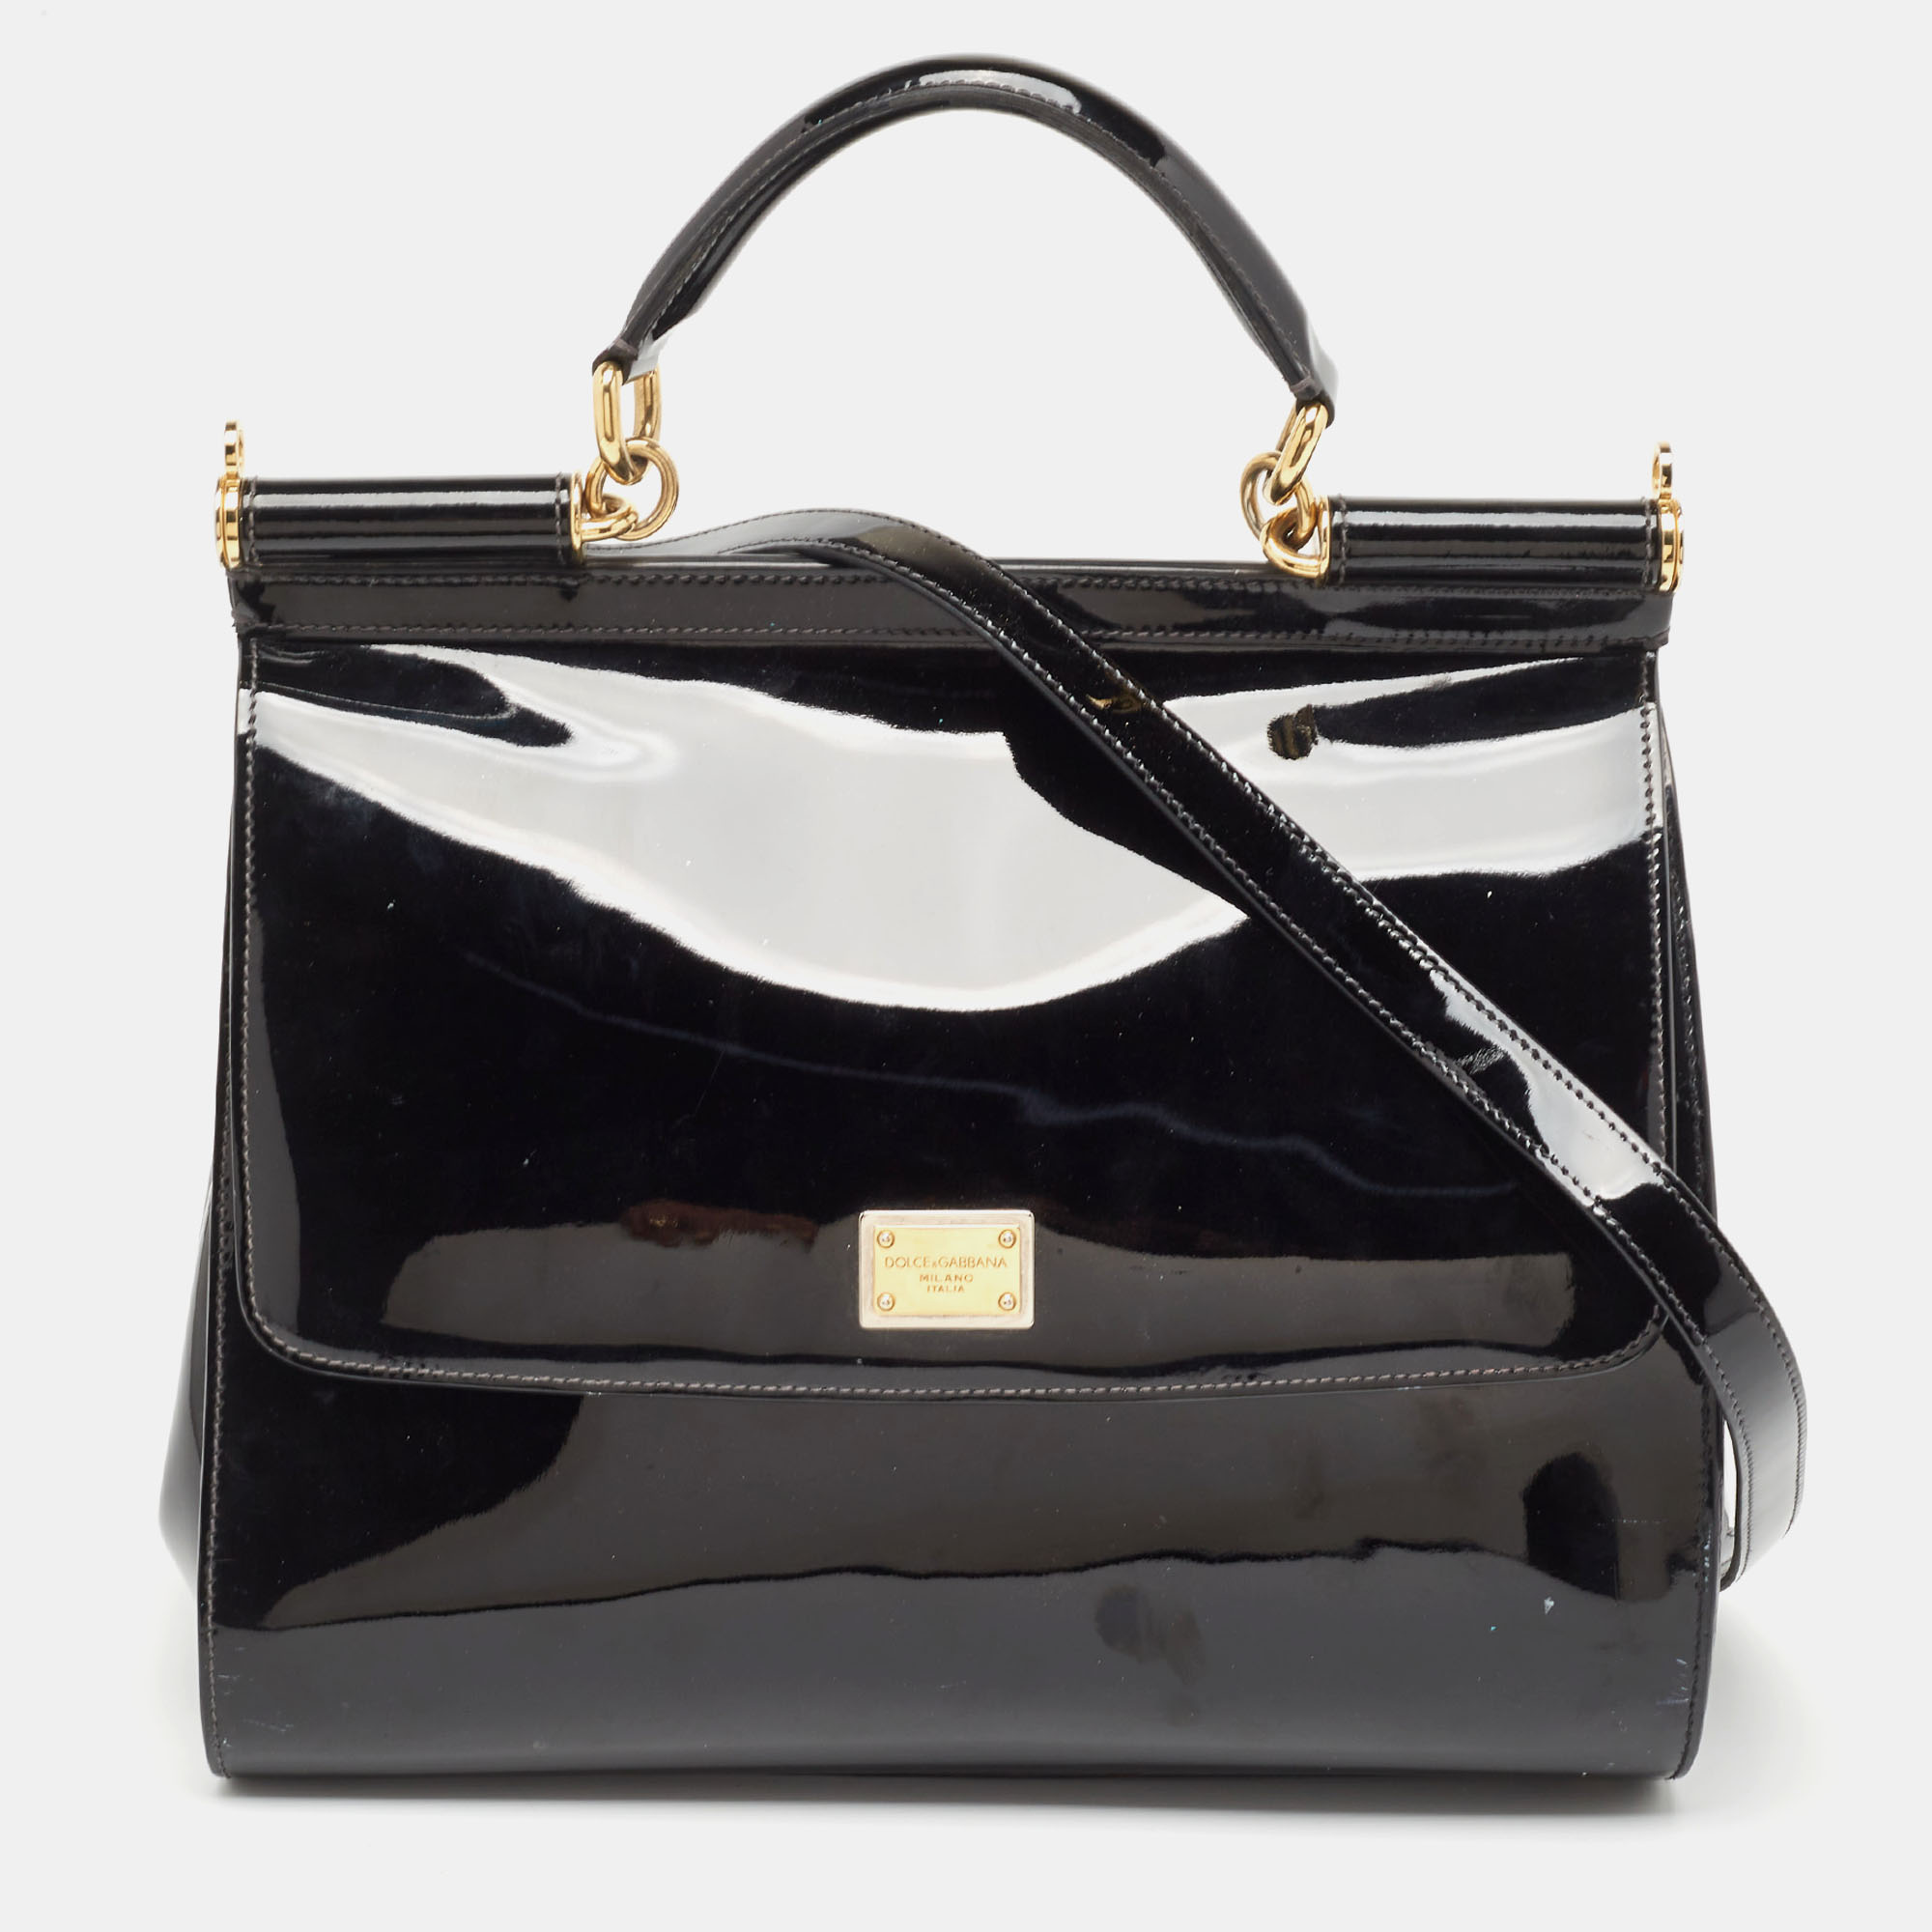 Dolce & gabbana black patent leather large miss sicily top handle bag